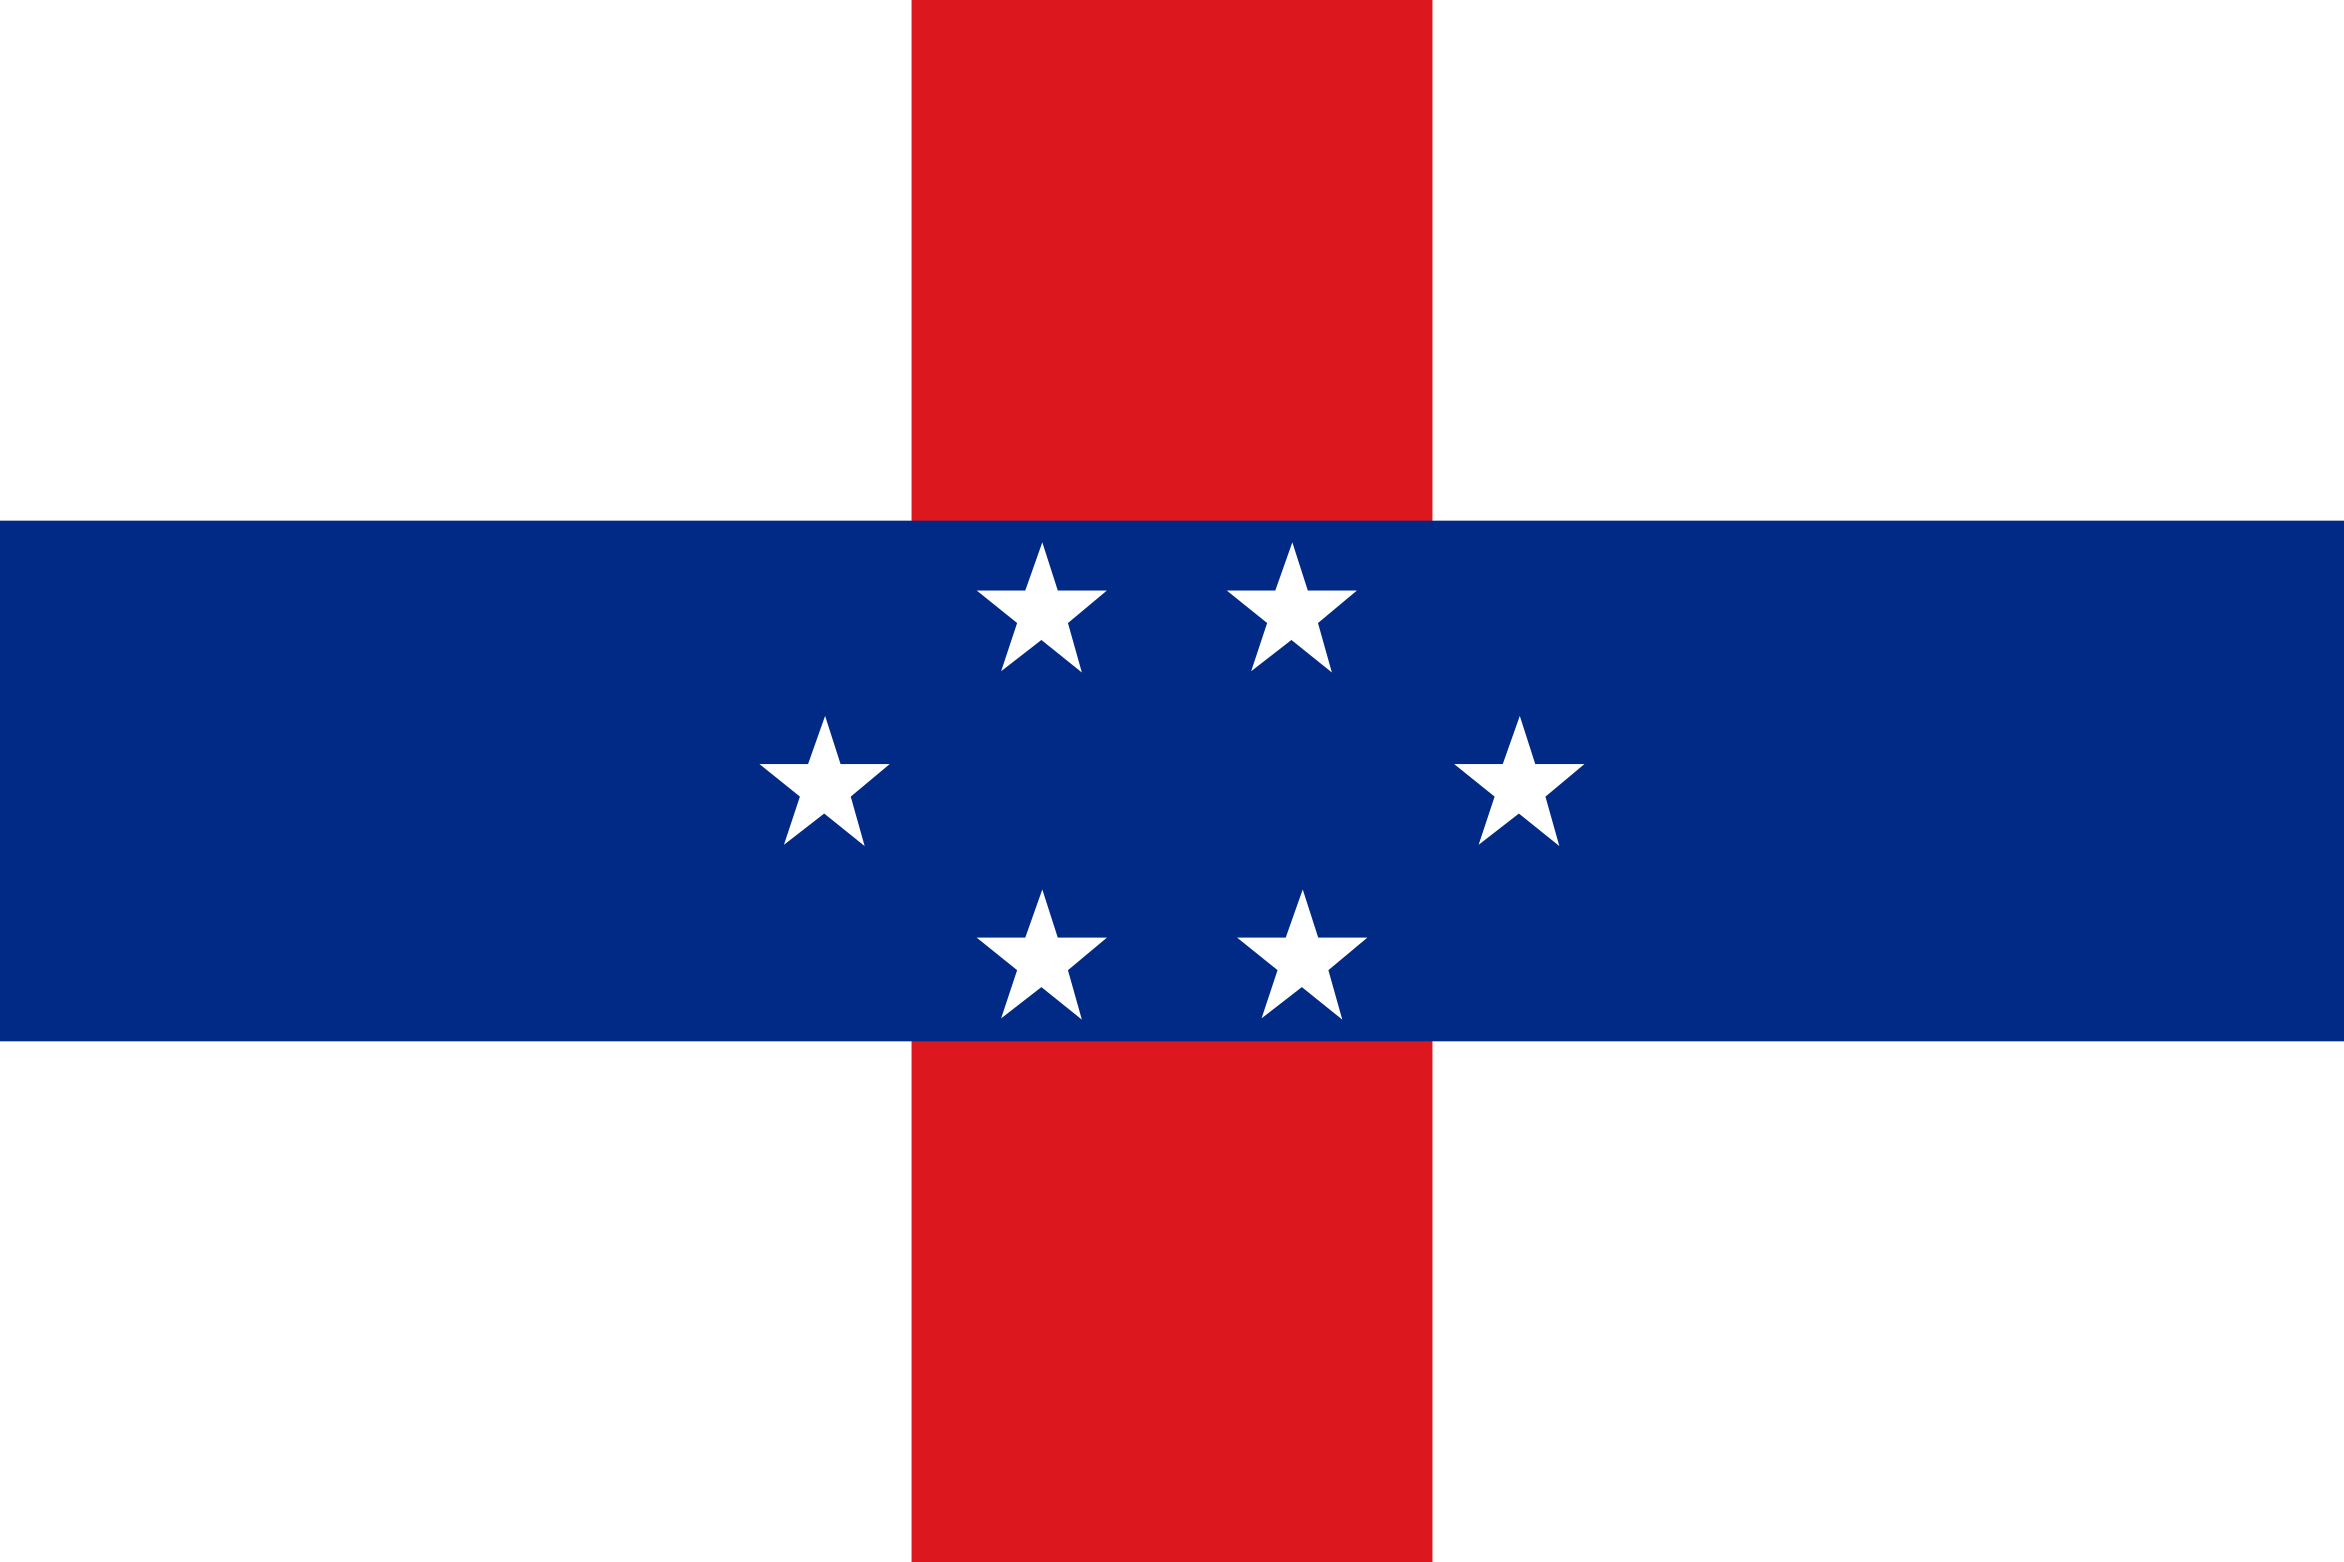 The Netherlands Antilles Flag Vector - Free Download